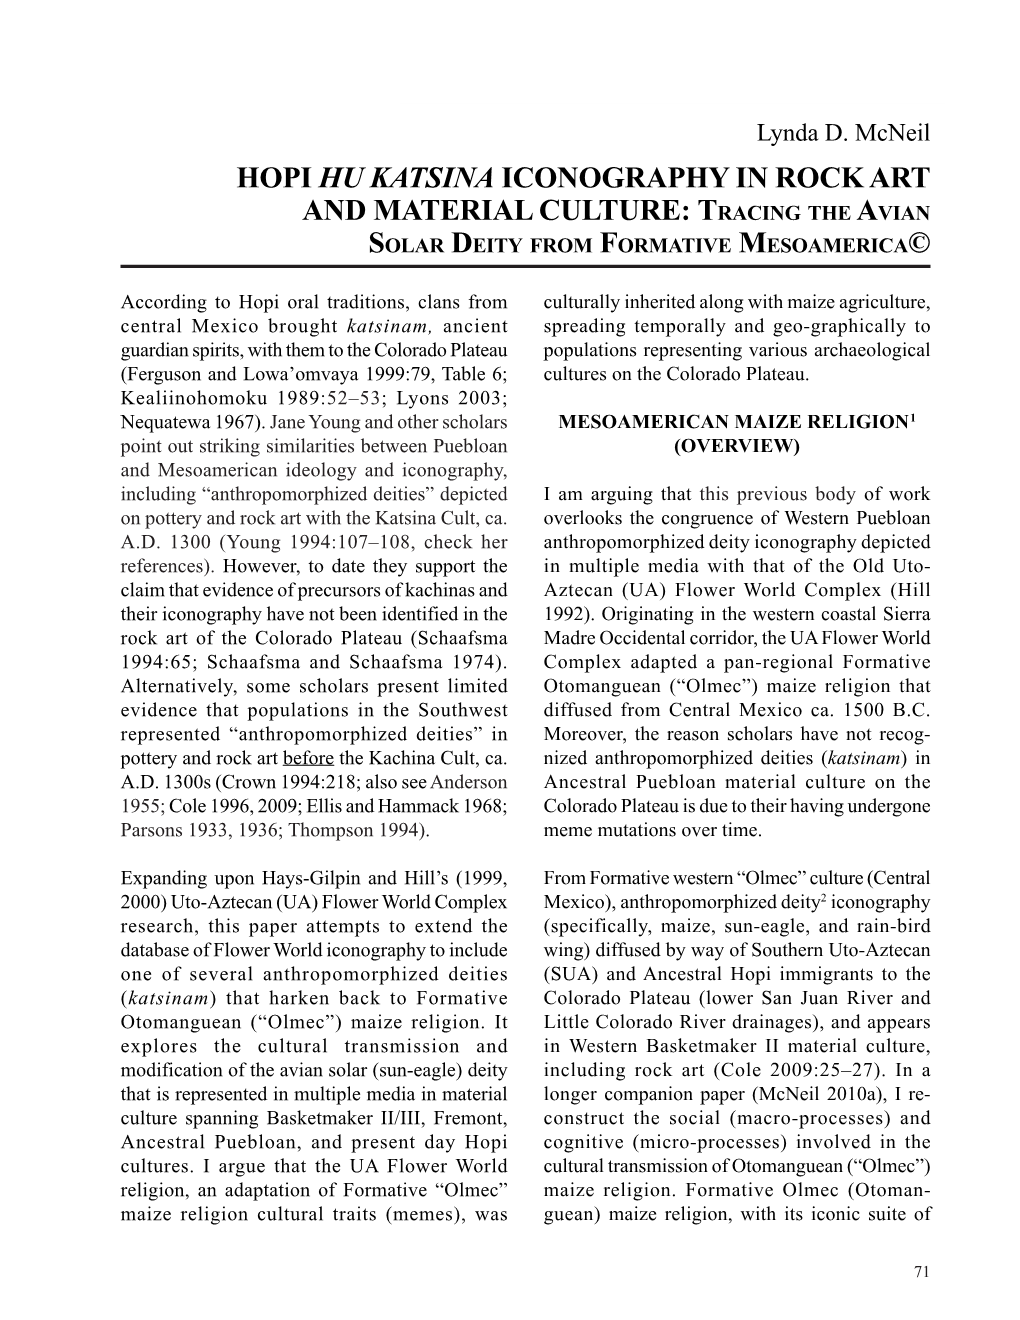 Hopi Hu Katsina Iconography in Rock Art and Material Culture: Tracing the Avian Solar Deity from Formative Mesoamerica!